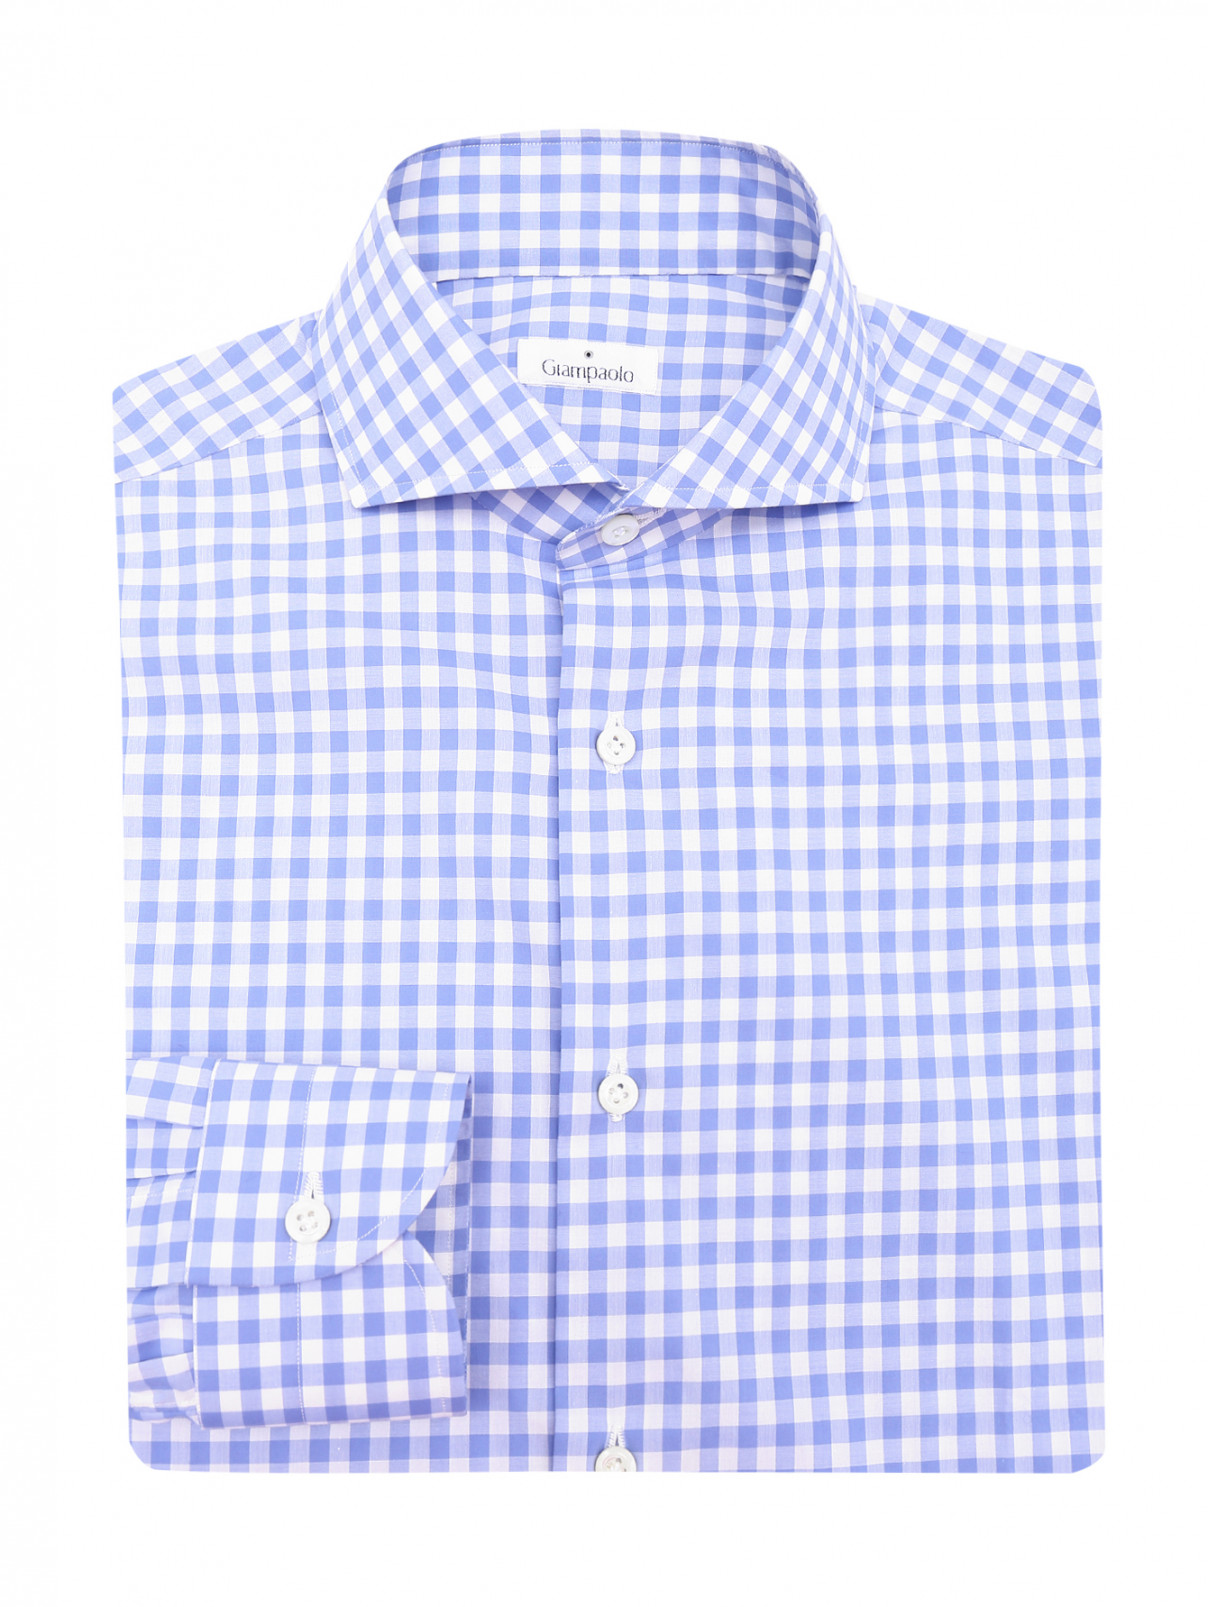 Рубашка из хлопка с узором "клетка" Giampaolo  –  Общий вид  – Цвет:  Узор